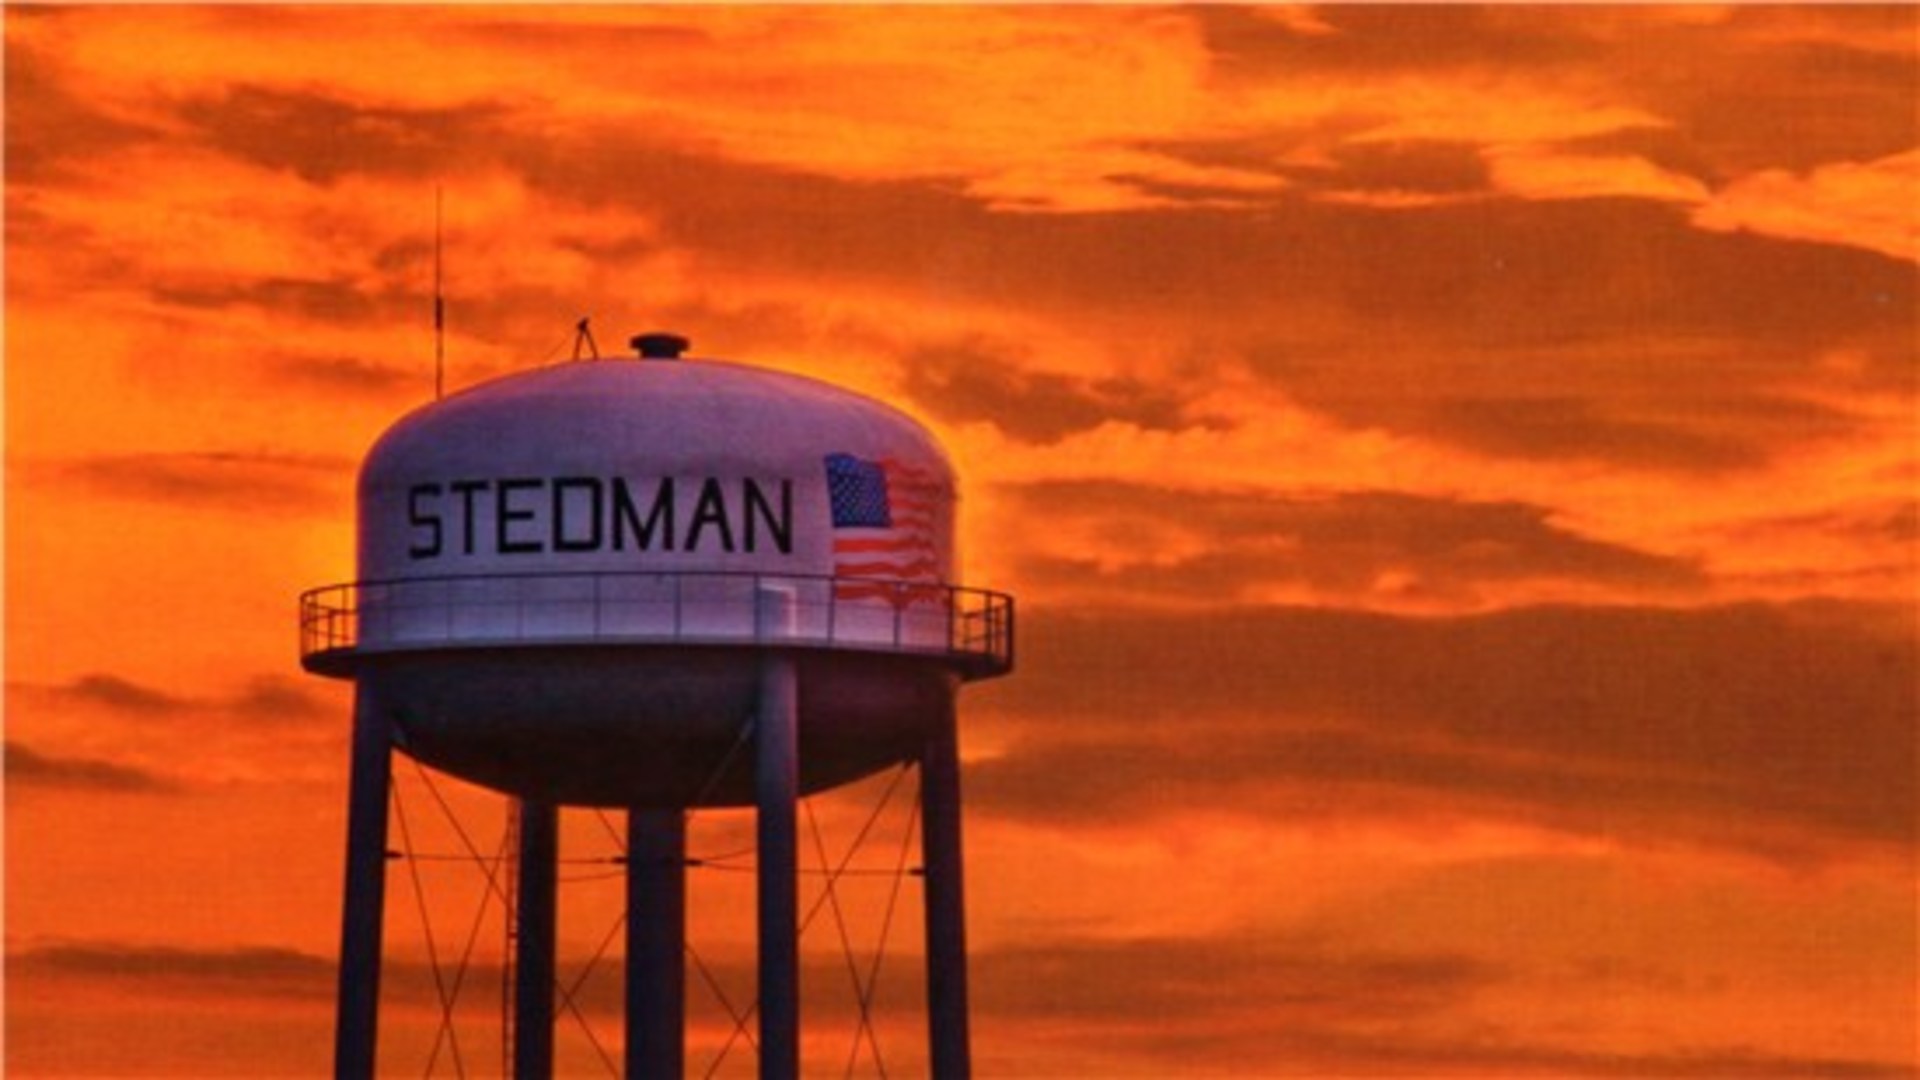 Town of Stedman